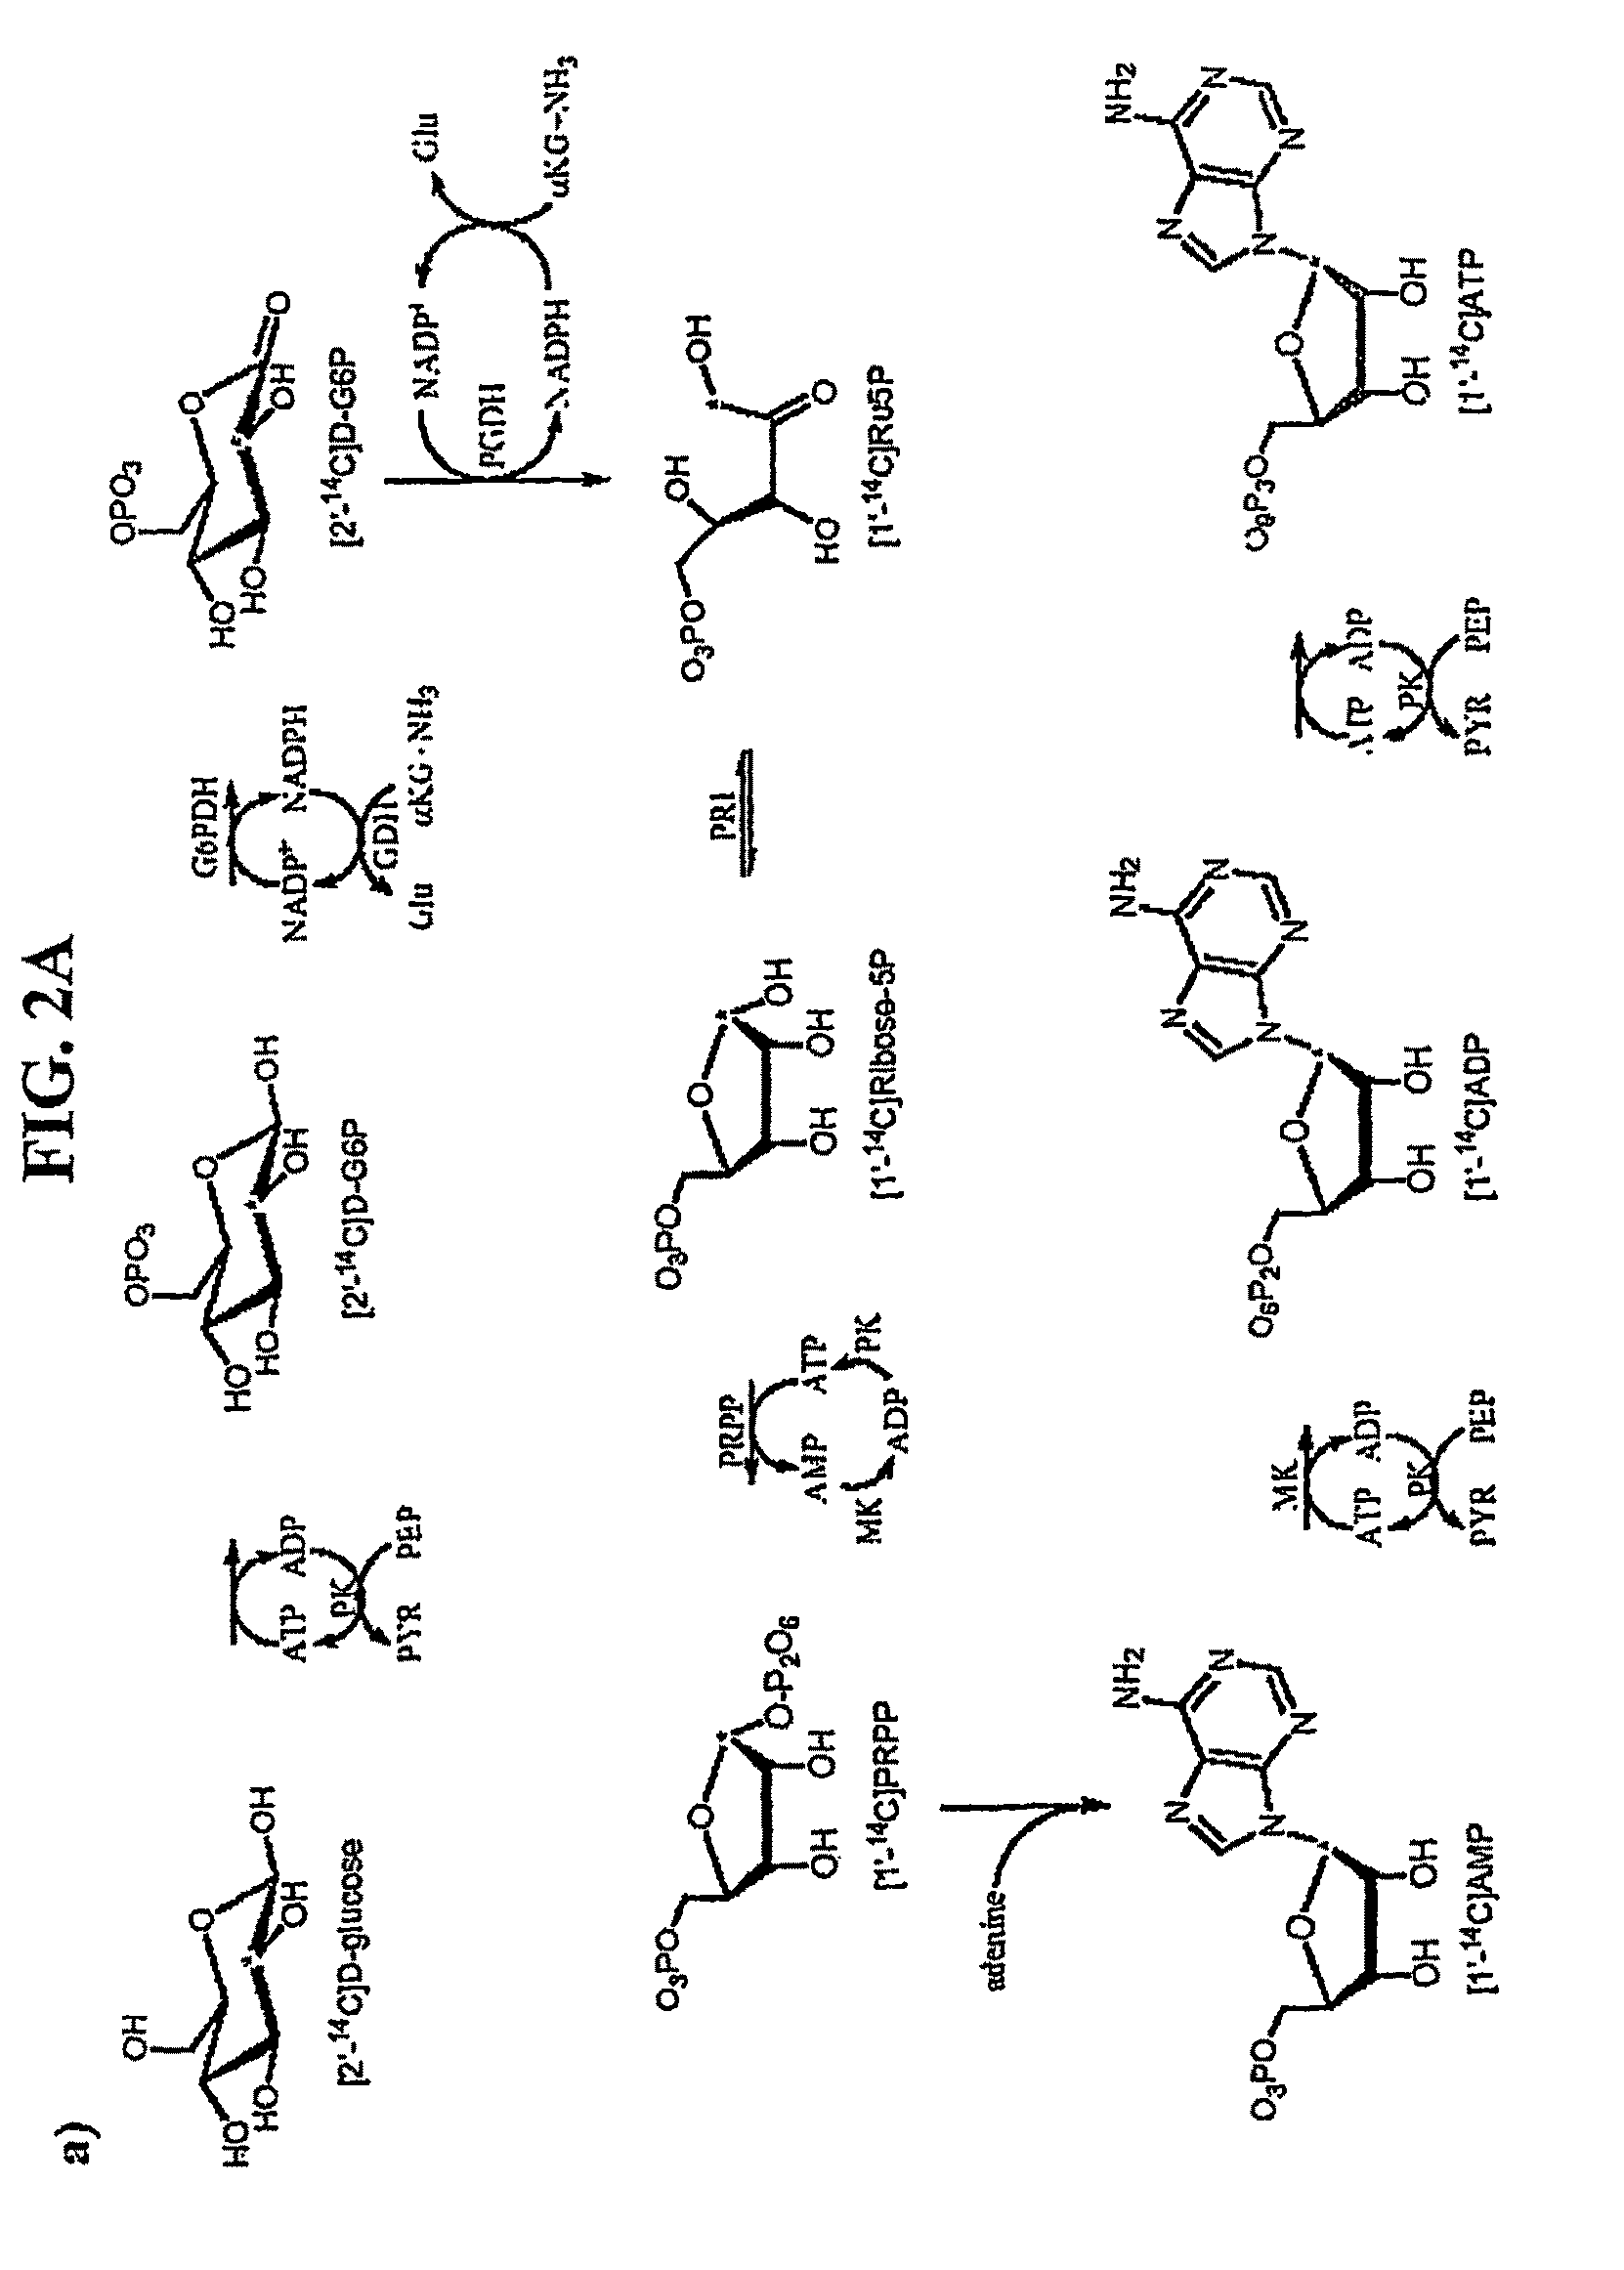 Transition state structure of 5'-methylthioadenosine/s-adenosylhomocysteine nucleosidases